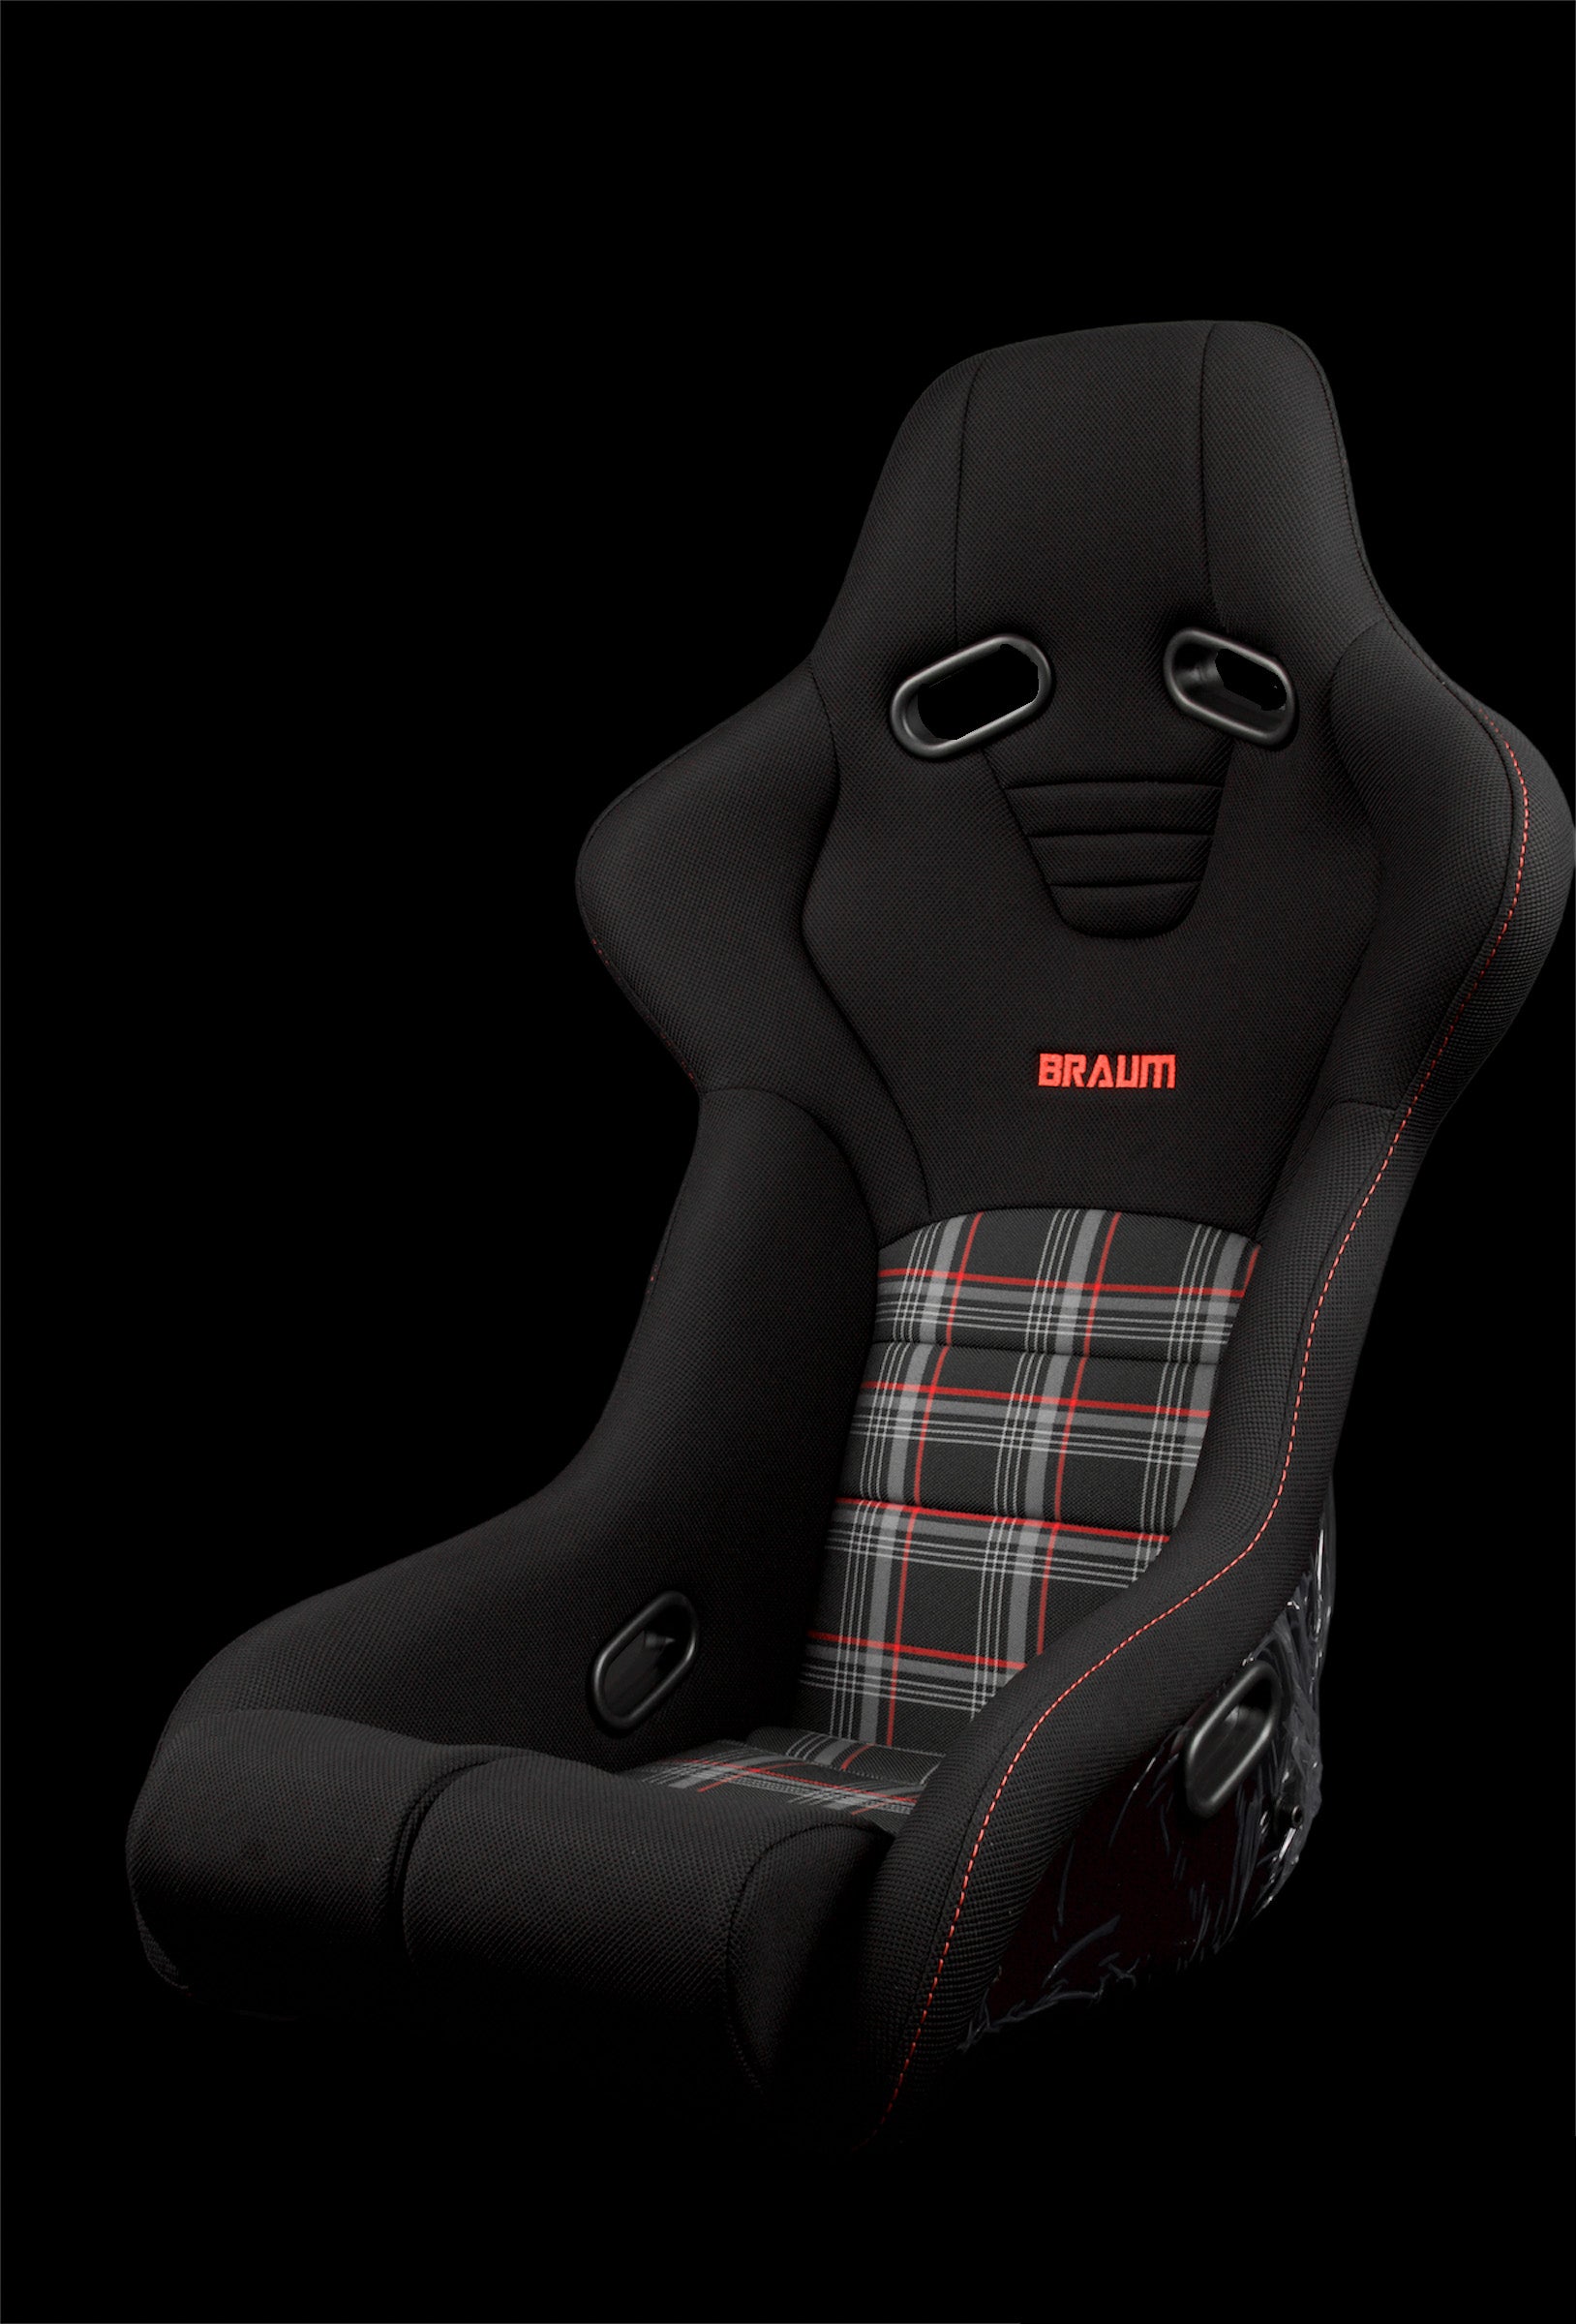 PROTOTIPO-R - Carbon fiber racing seat